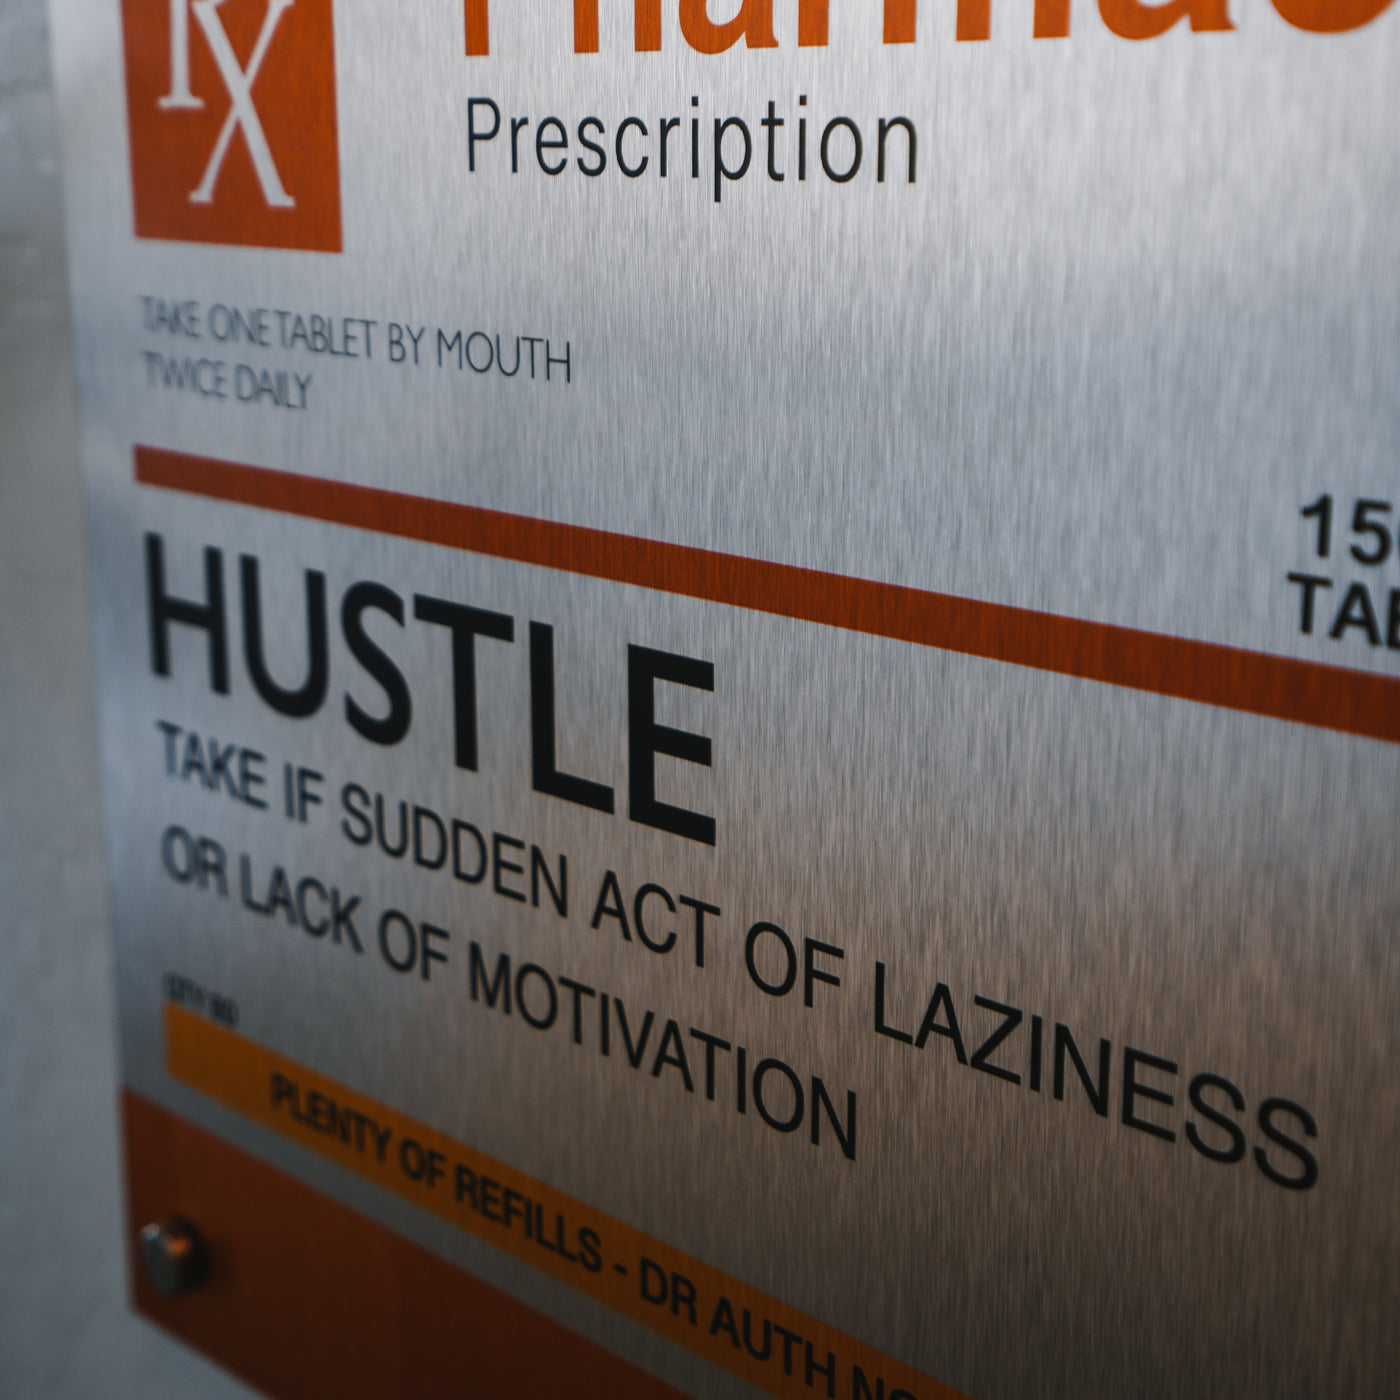 Hustle Prescription Art